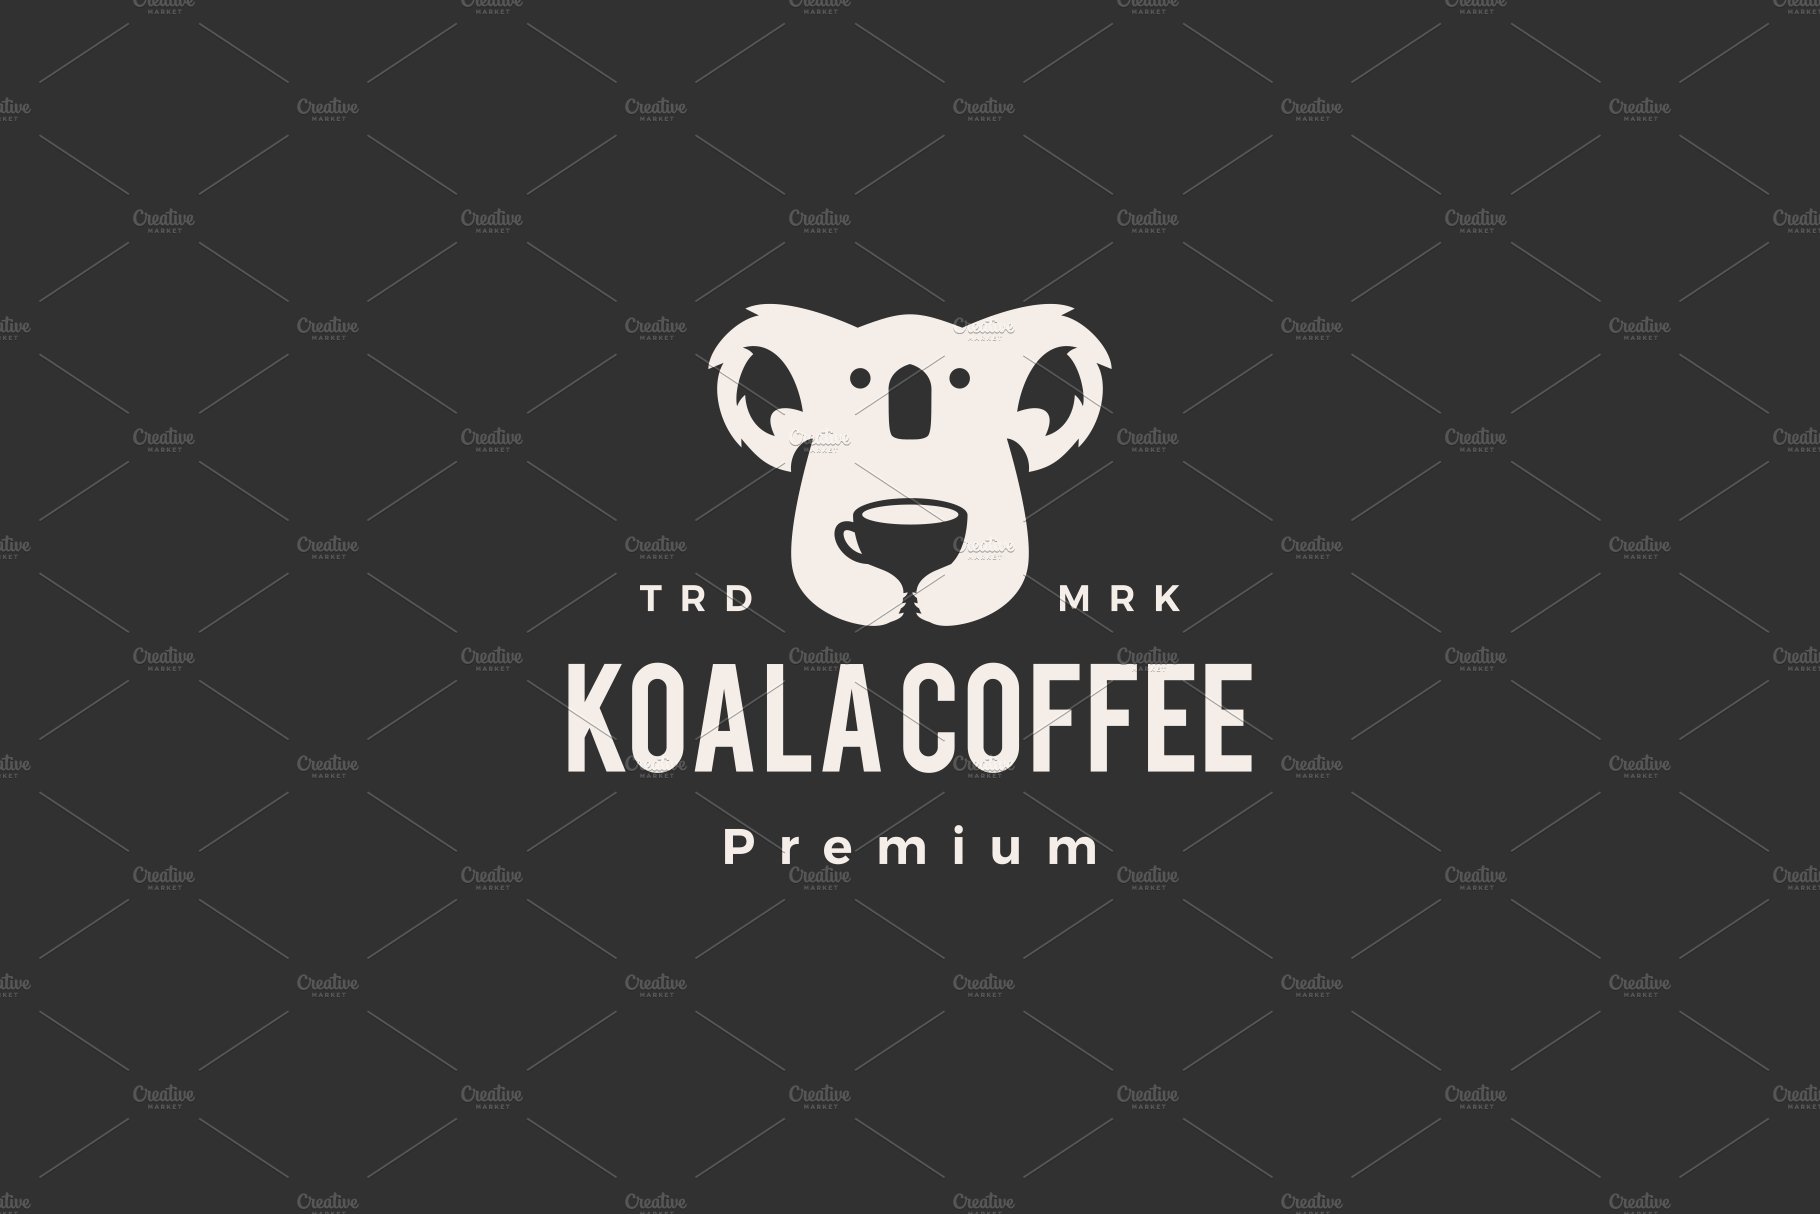 koala coffee hipster vintage logo cover image.